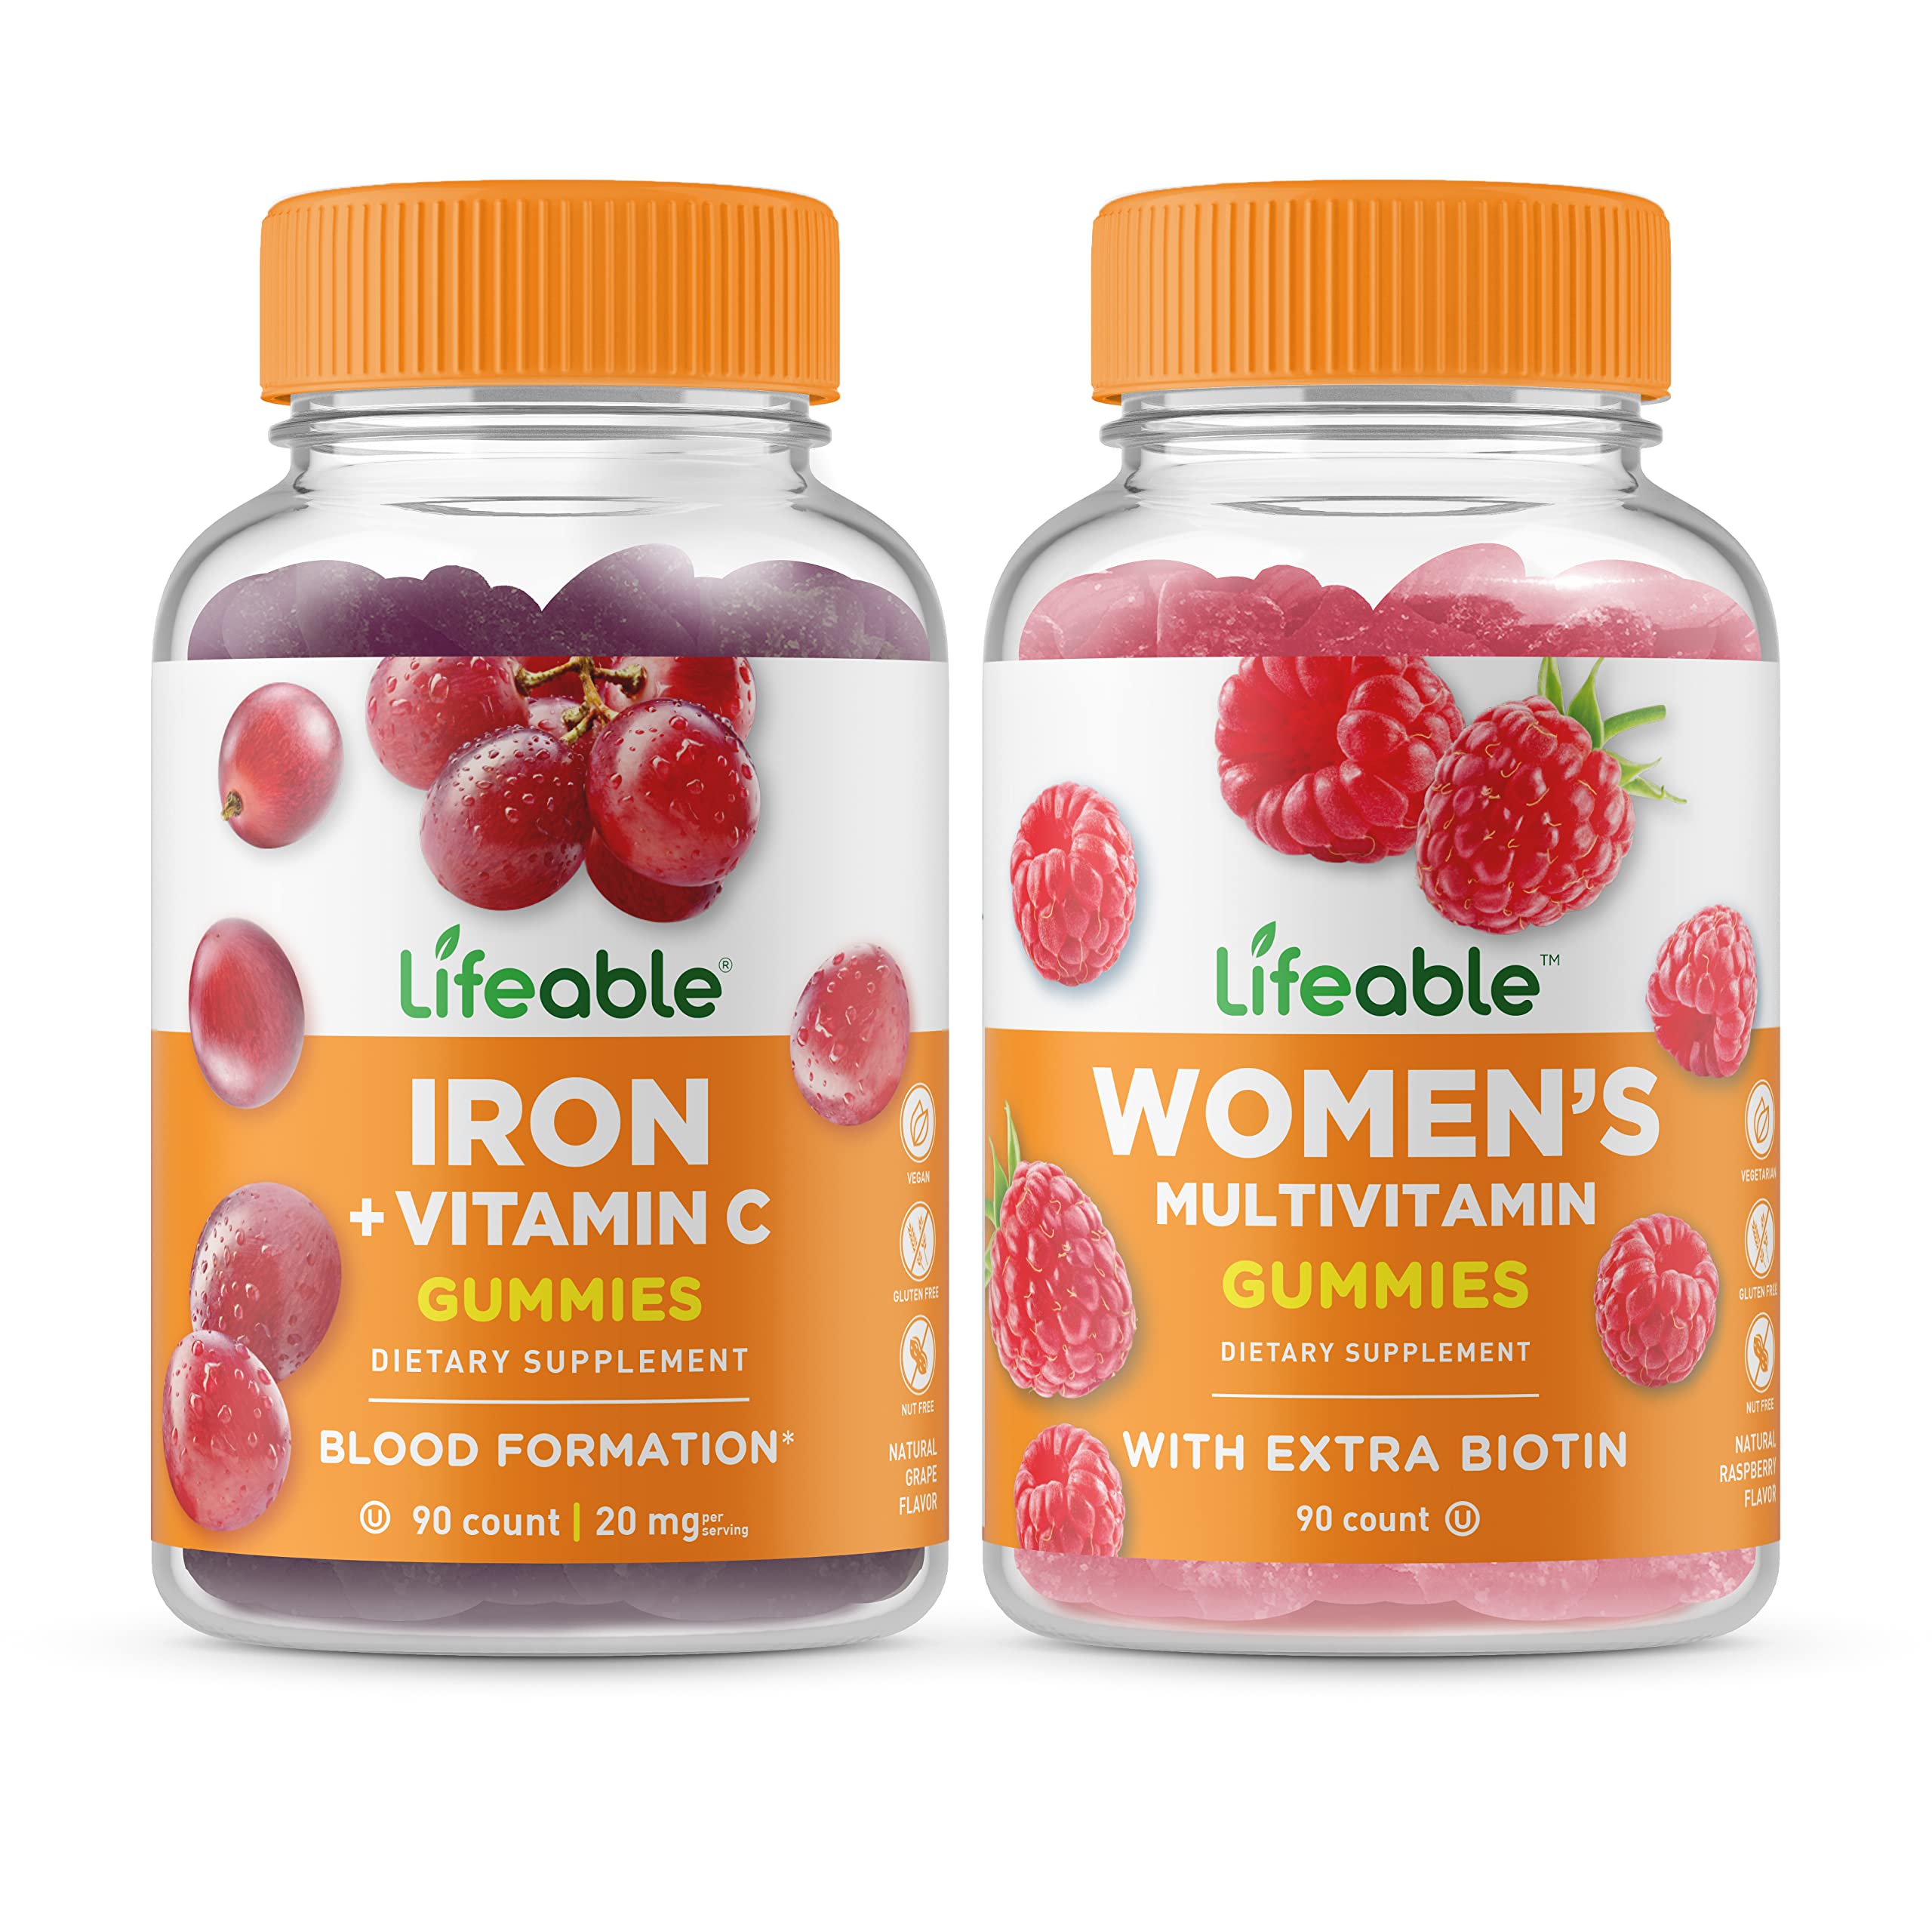 Lifeable Iron with Vitamin C + Women's Multivitamin, Gummies Bundle - Great Tasting, Vitamin Supplement, Gluten Free, GMO Free, Chewable Gummy